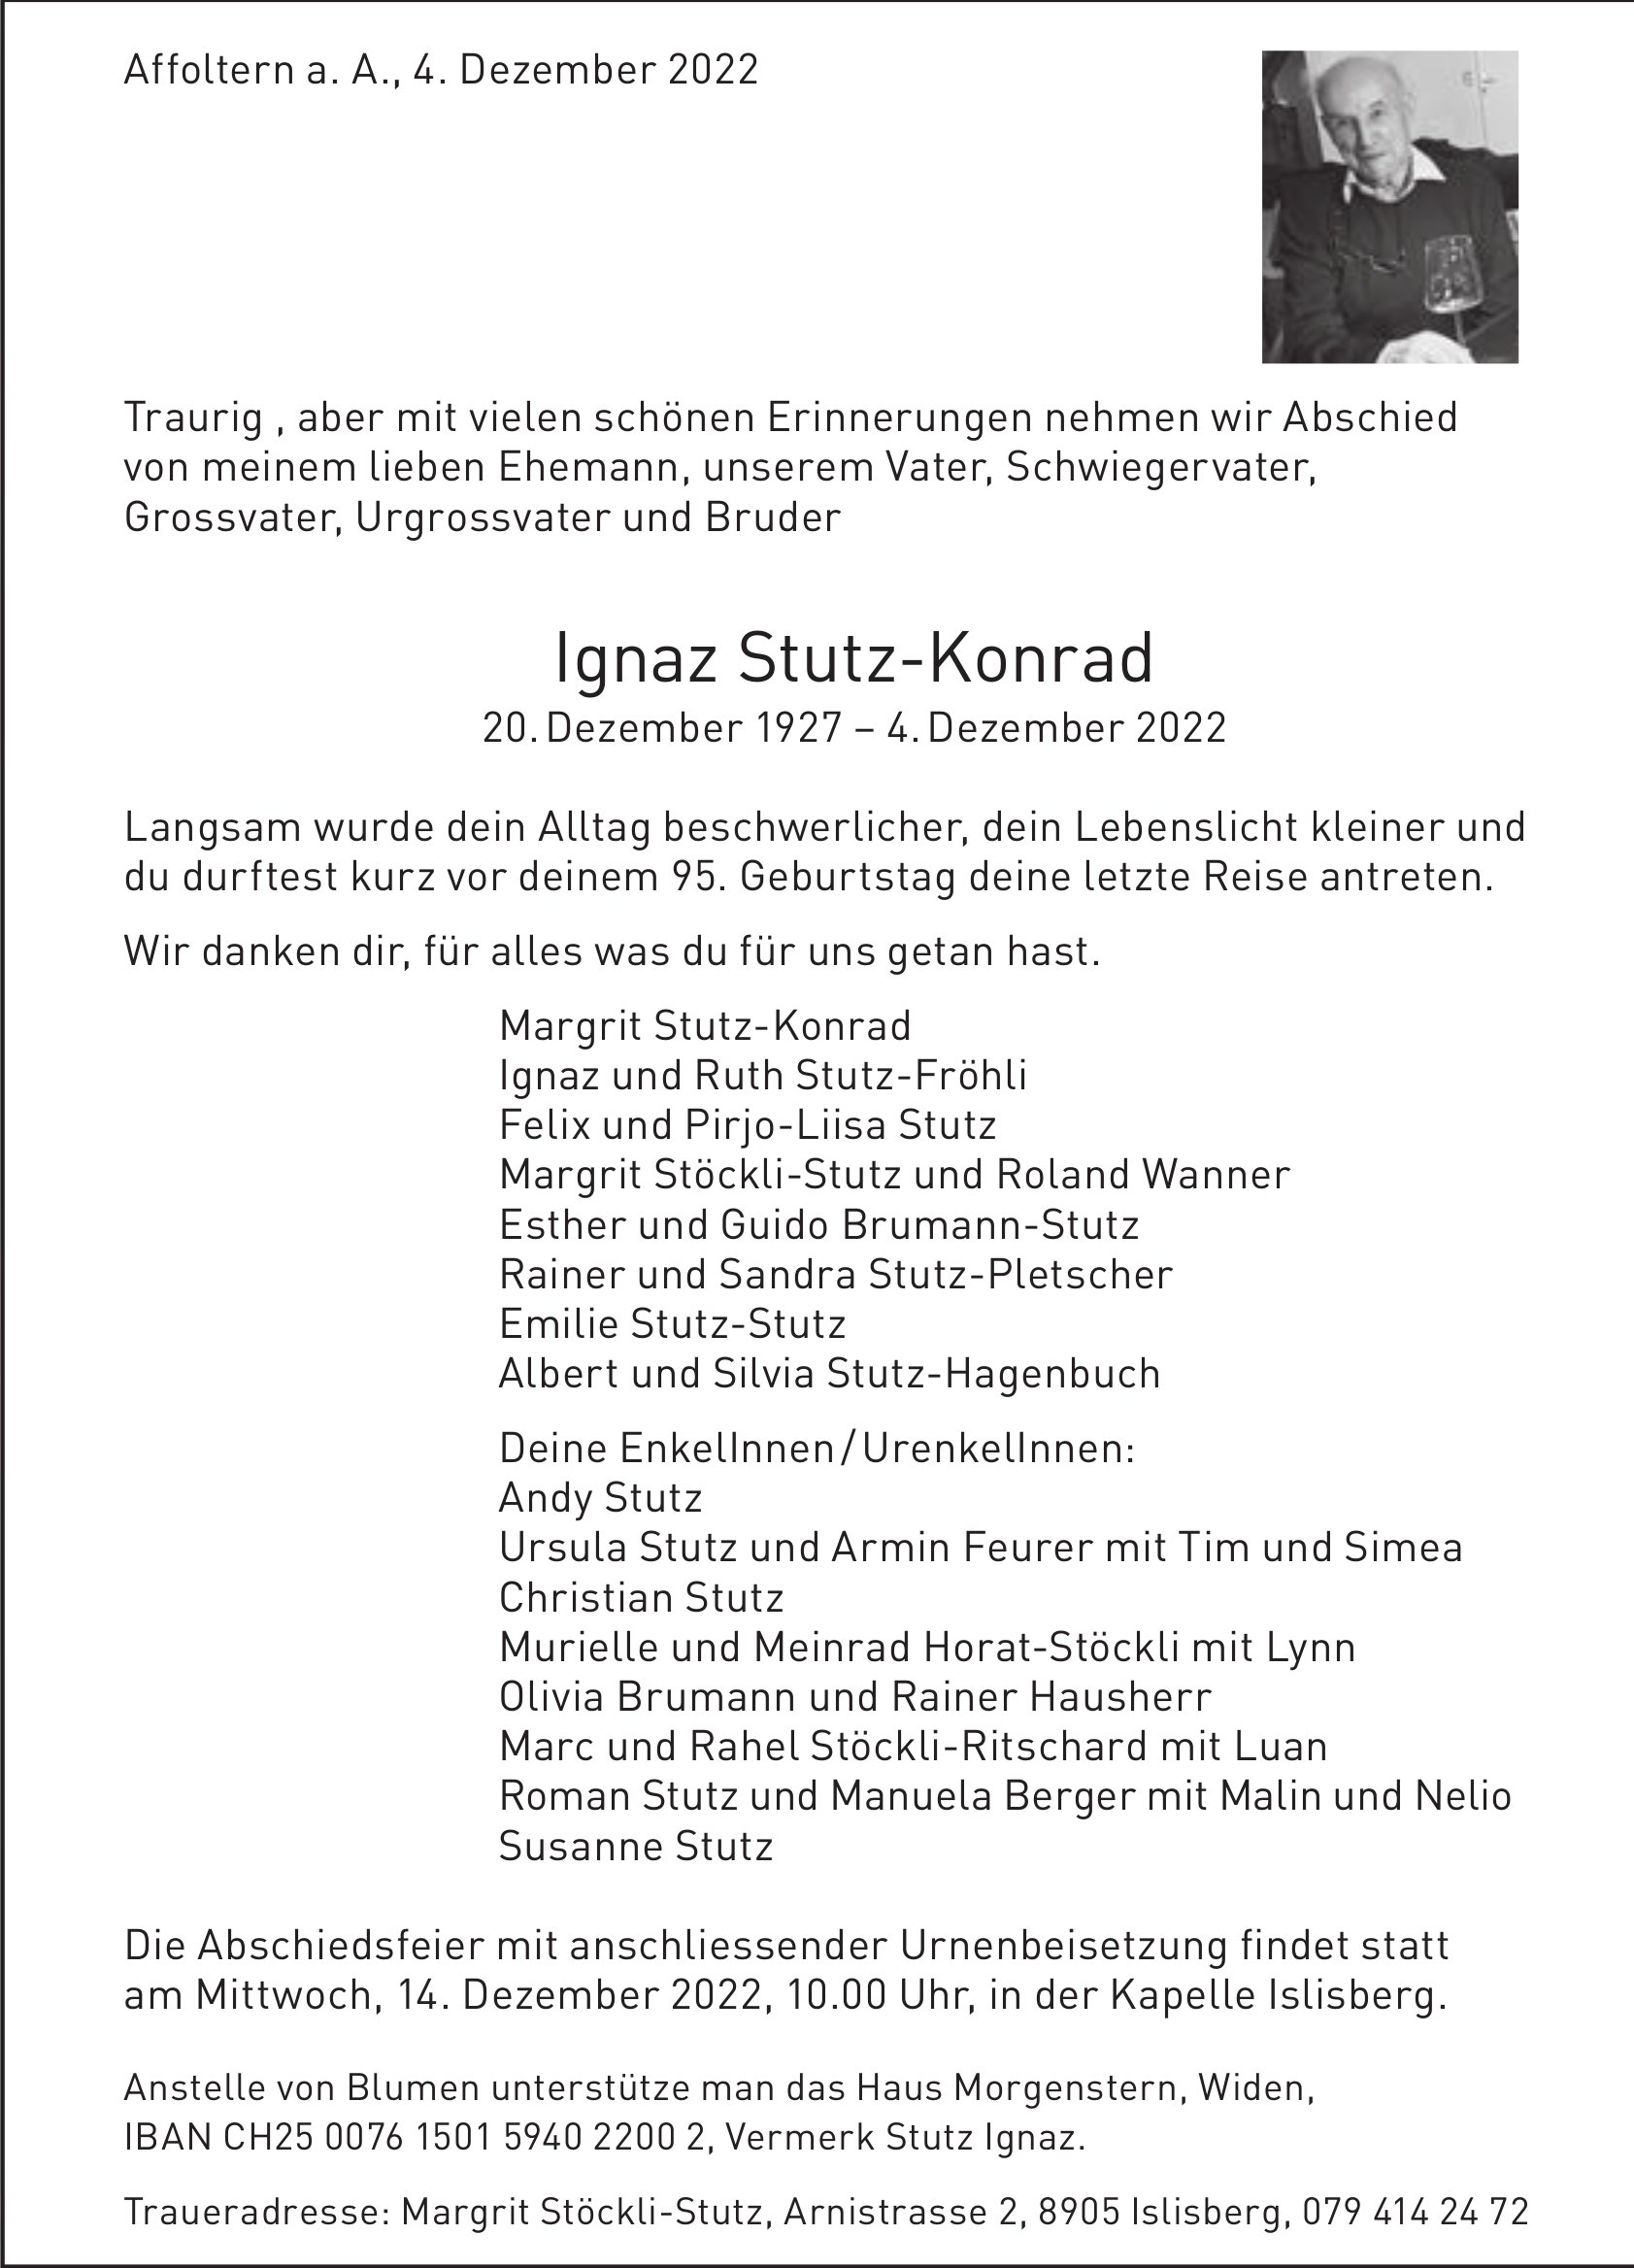 Ignaz Stutz-Konrad, Dezember 2022 / TA